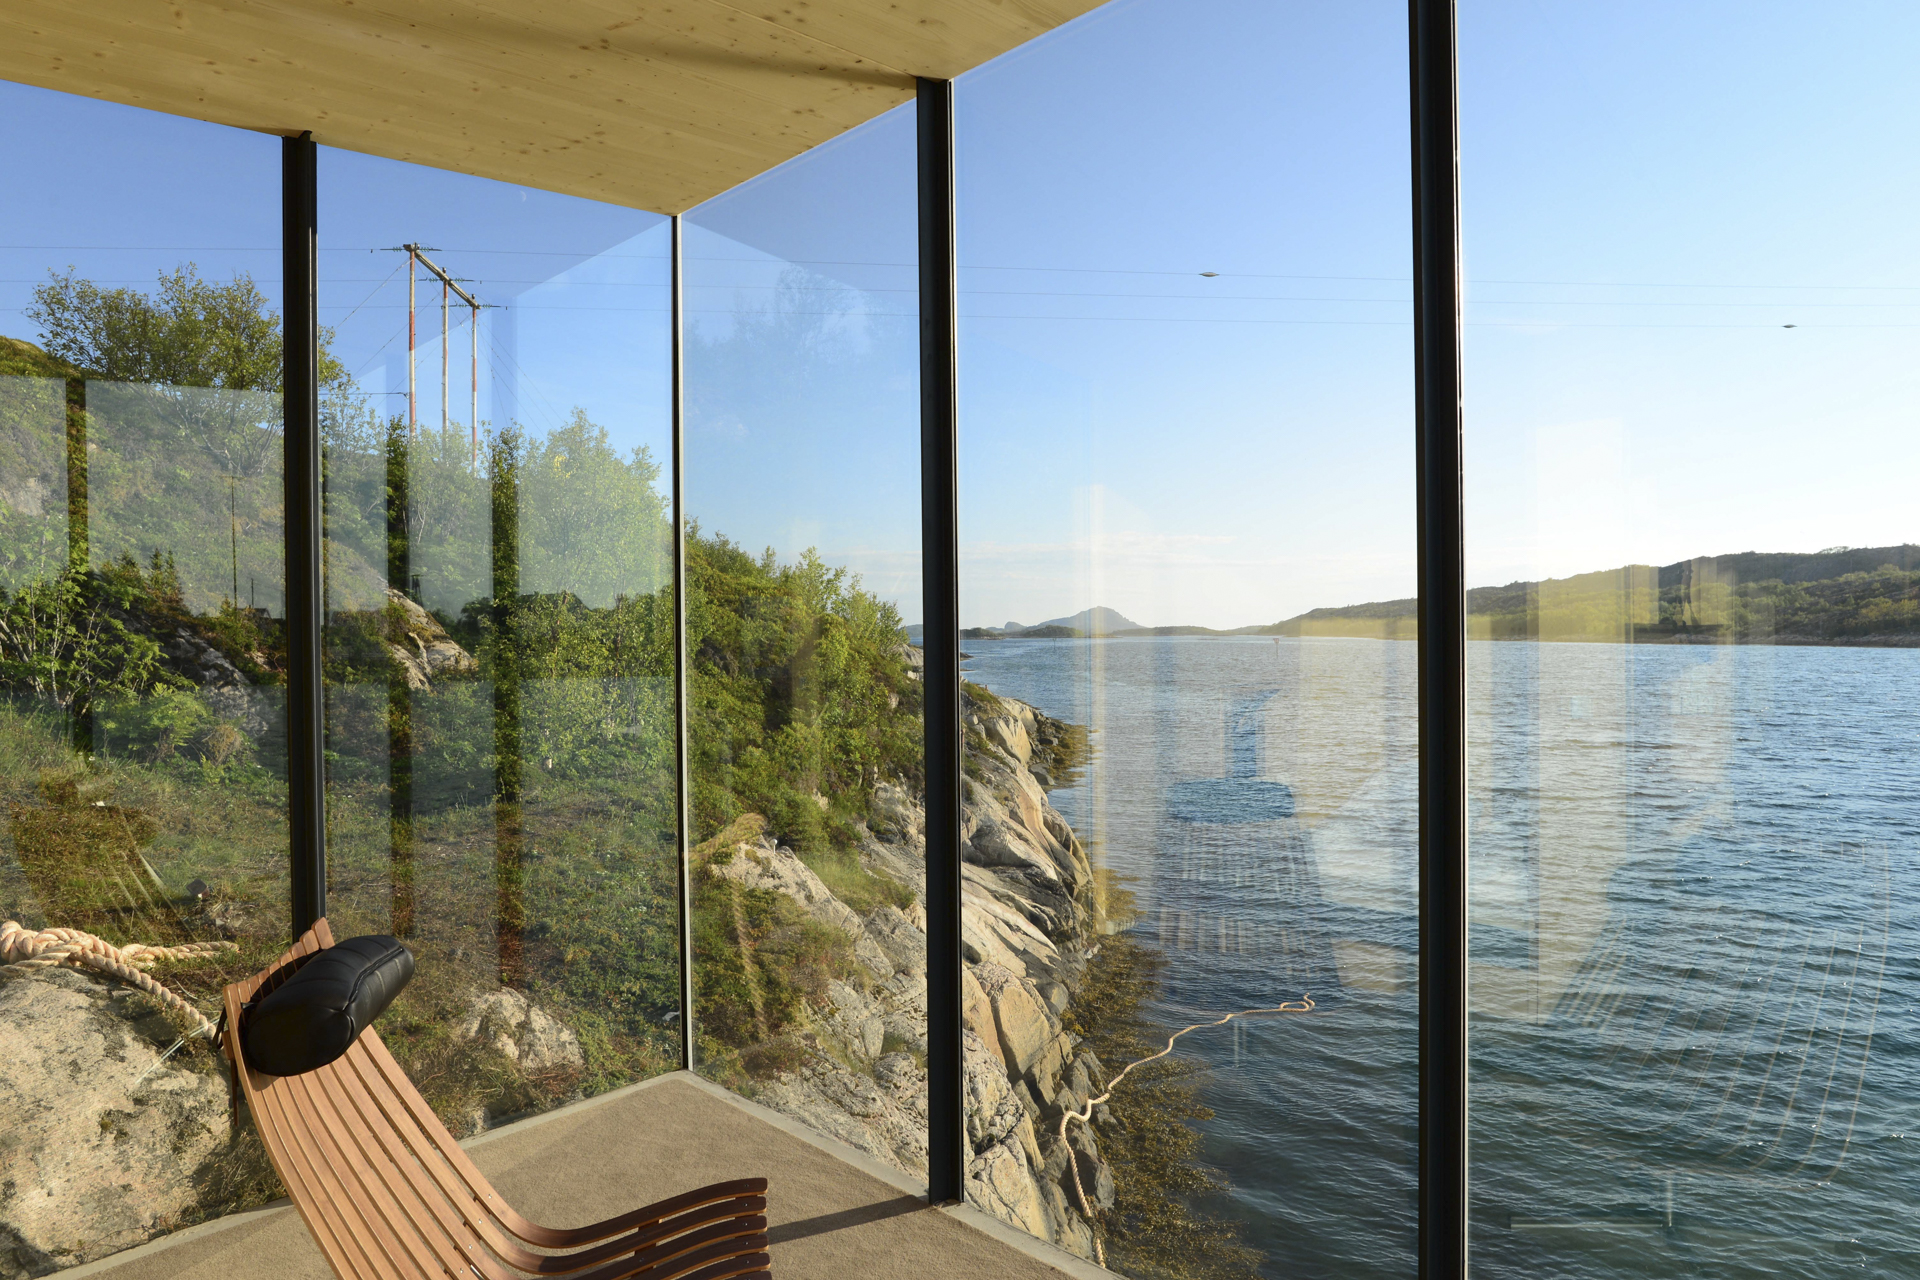 Norway's Manshausen Island Resort